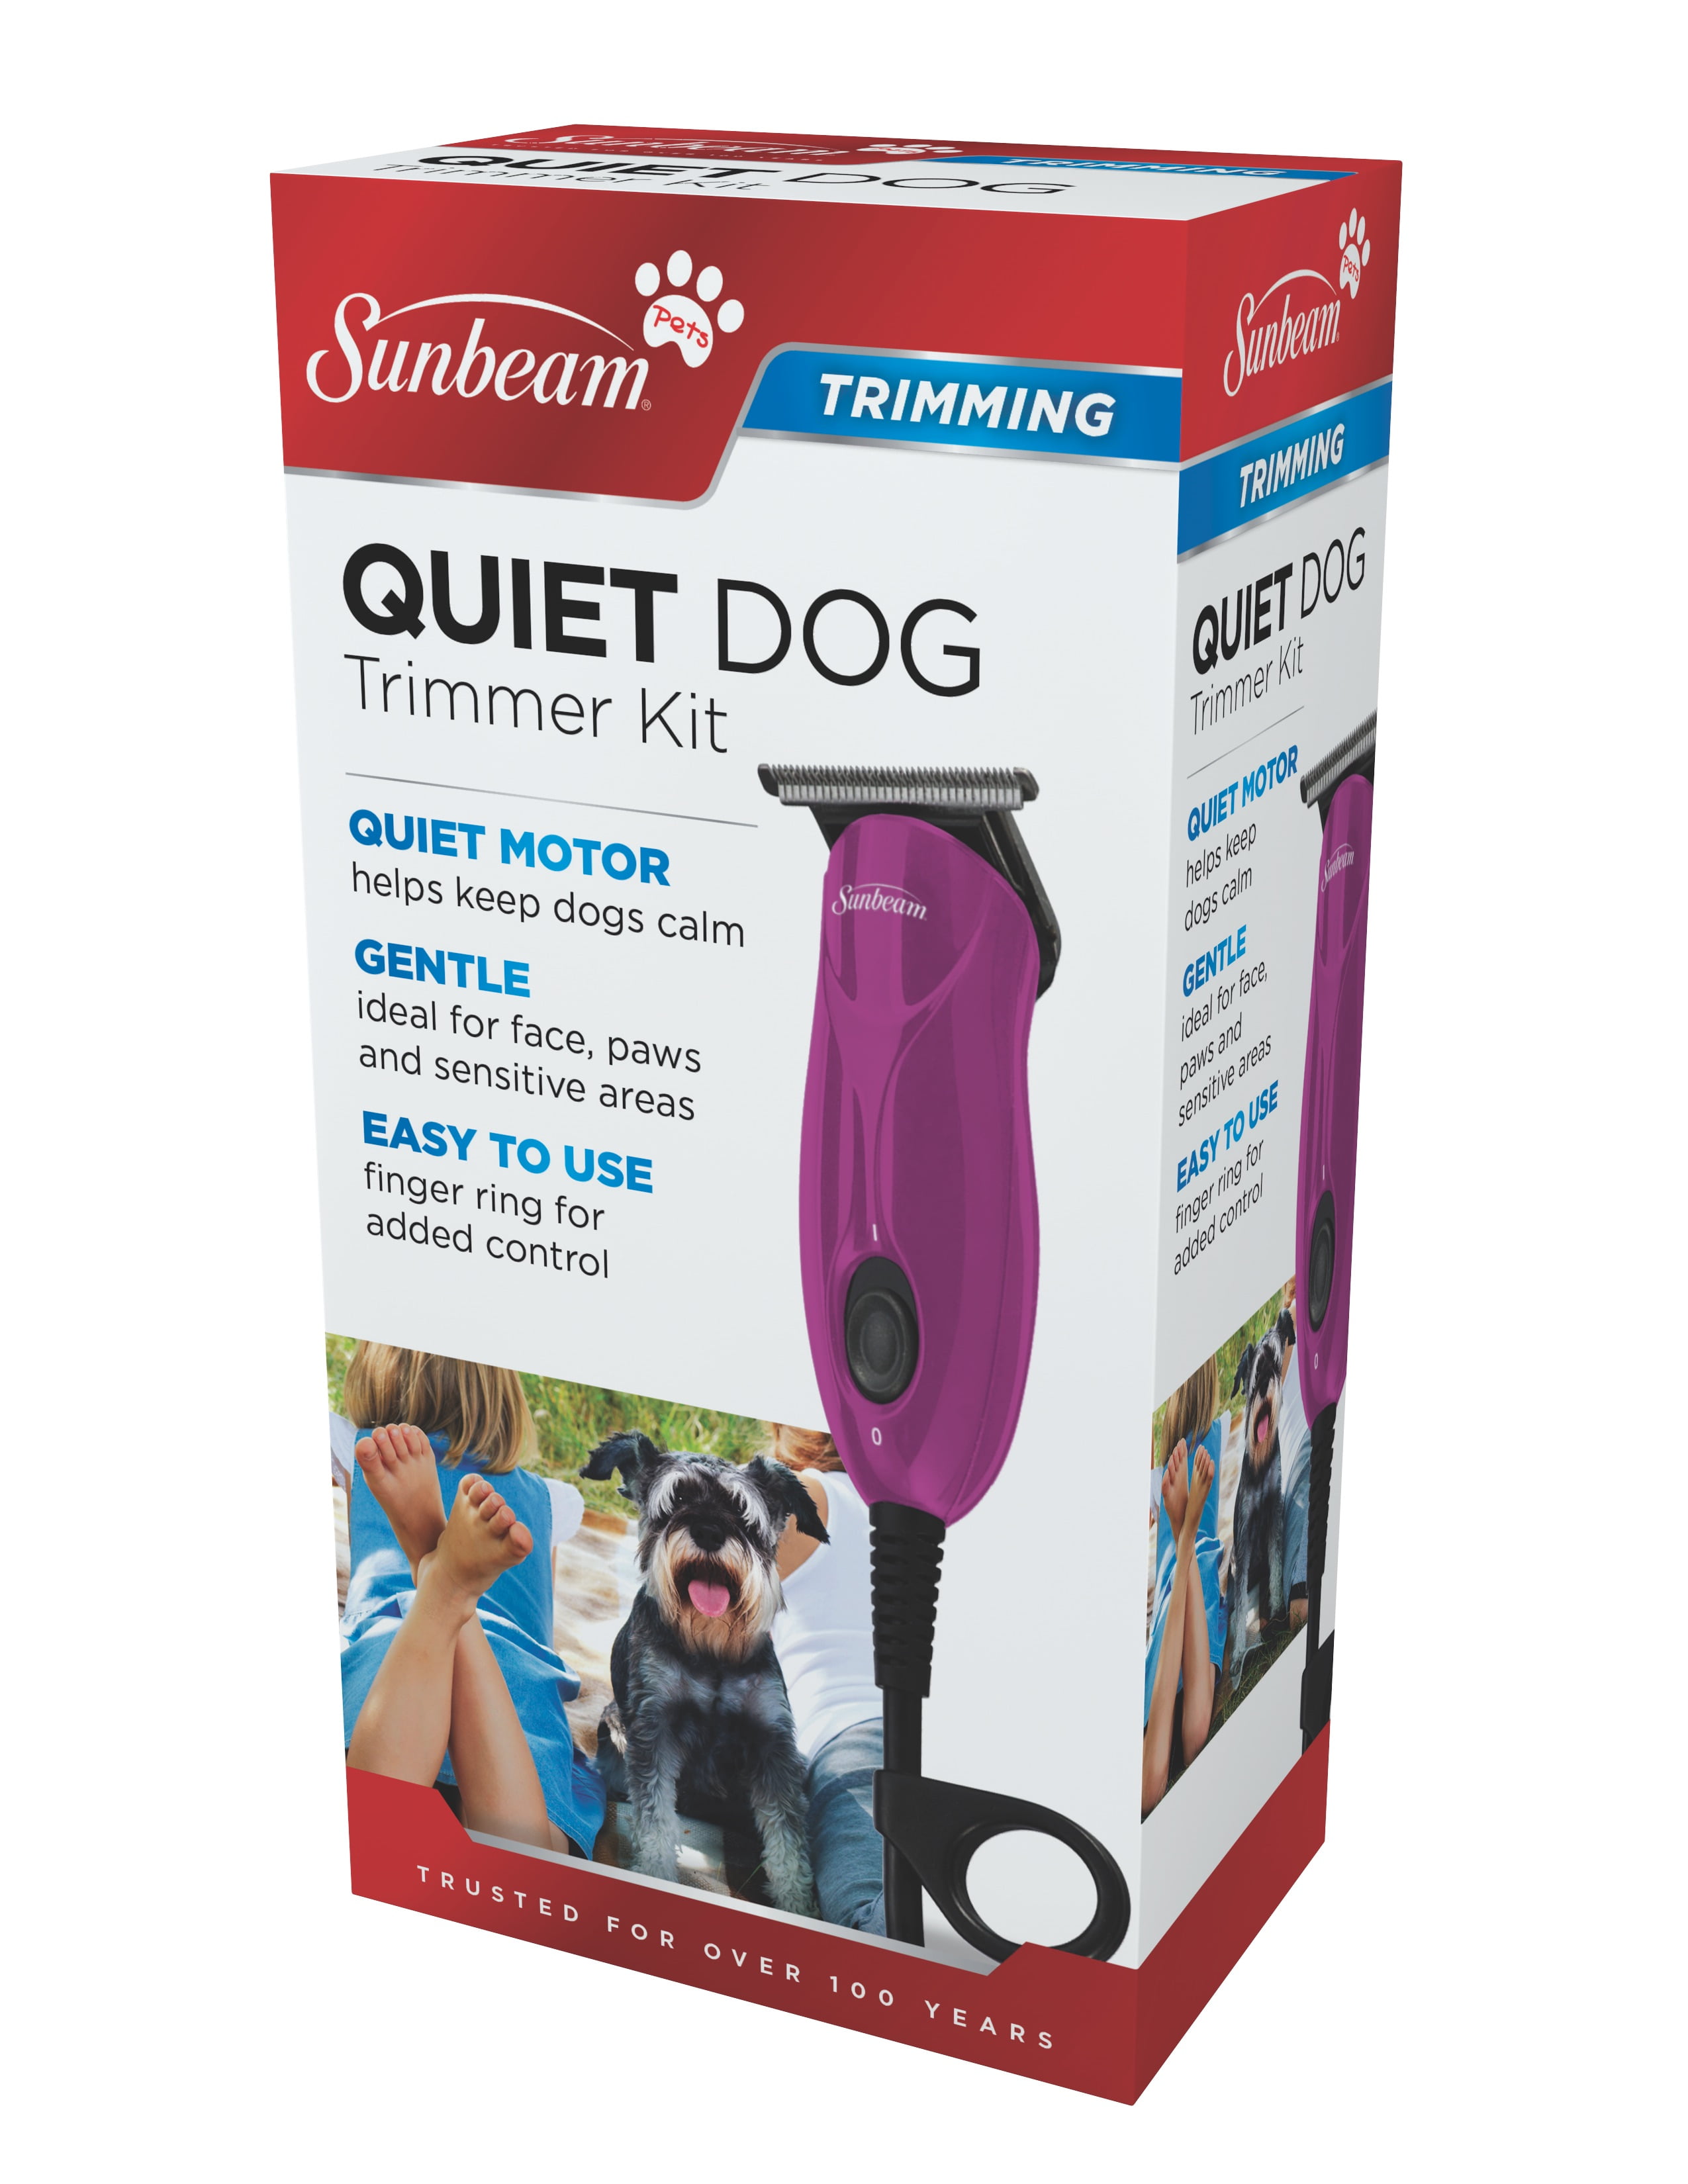 sunbeam quiet dog clipper kit